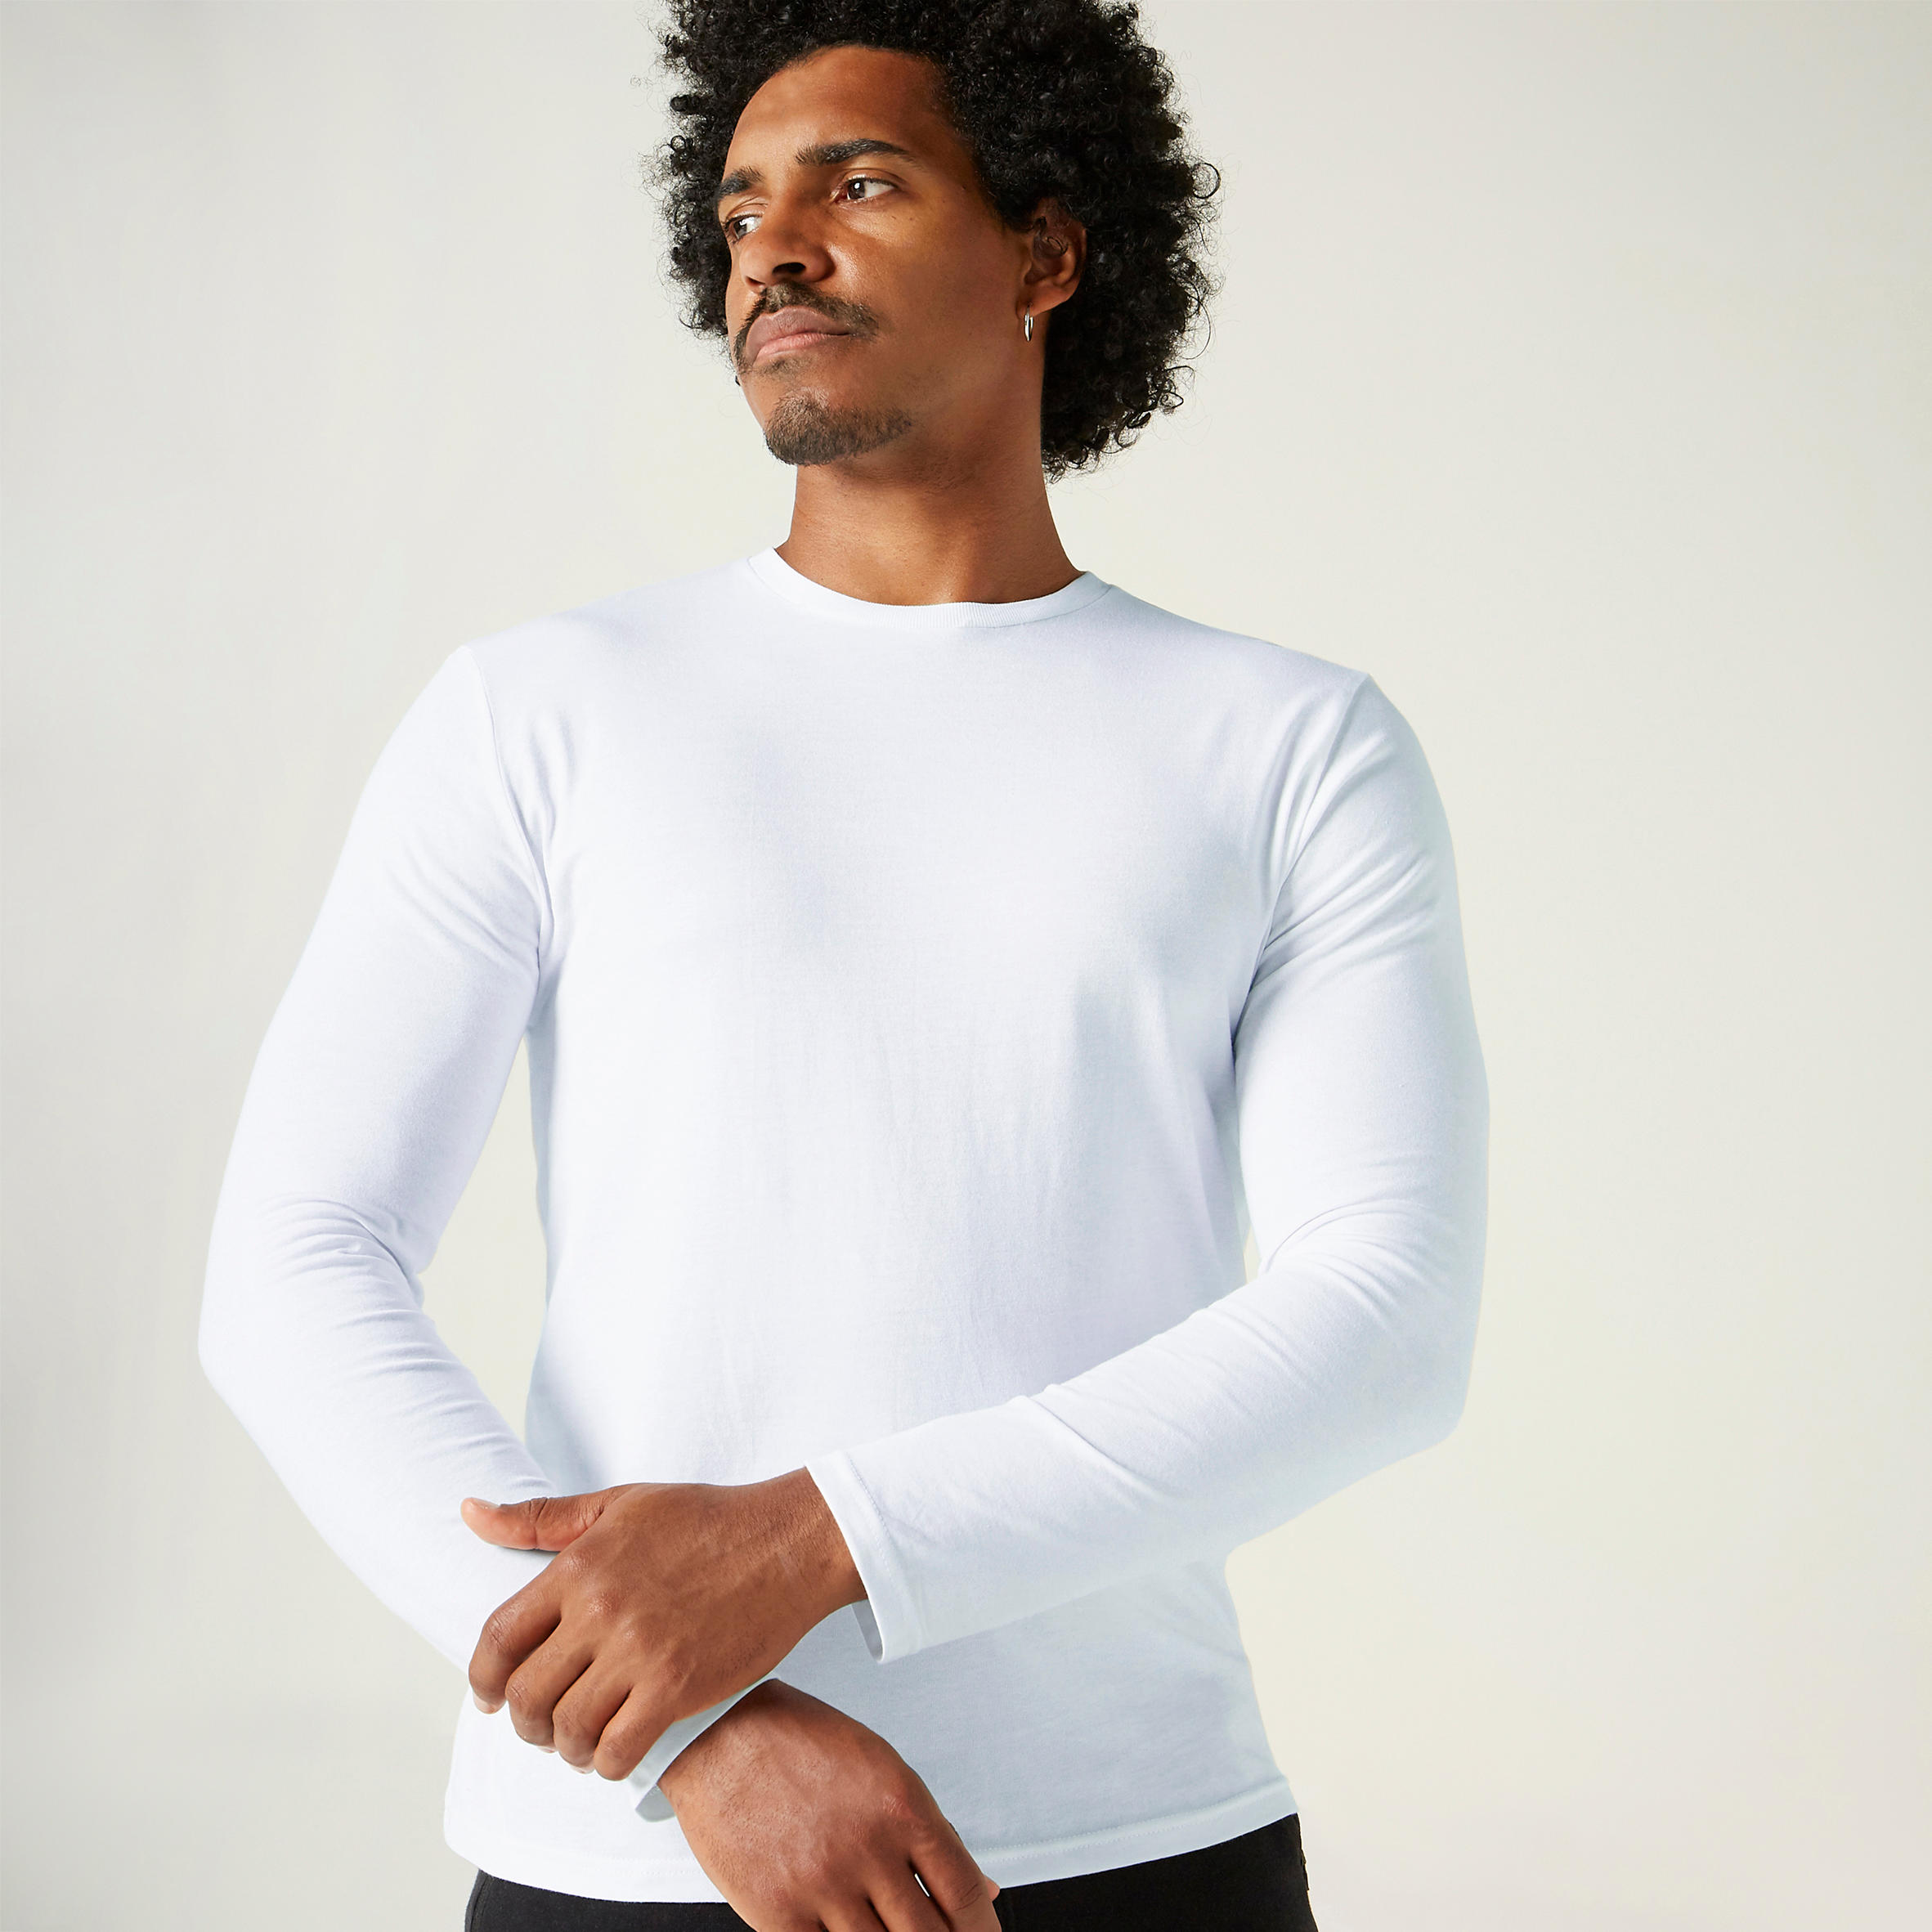 Men's Long-Sleeved Straight-Cut Crew Neck Cotton Fitness T-Shirt 100 - Glacier White 1/5